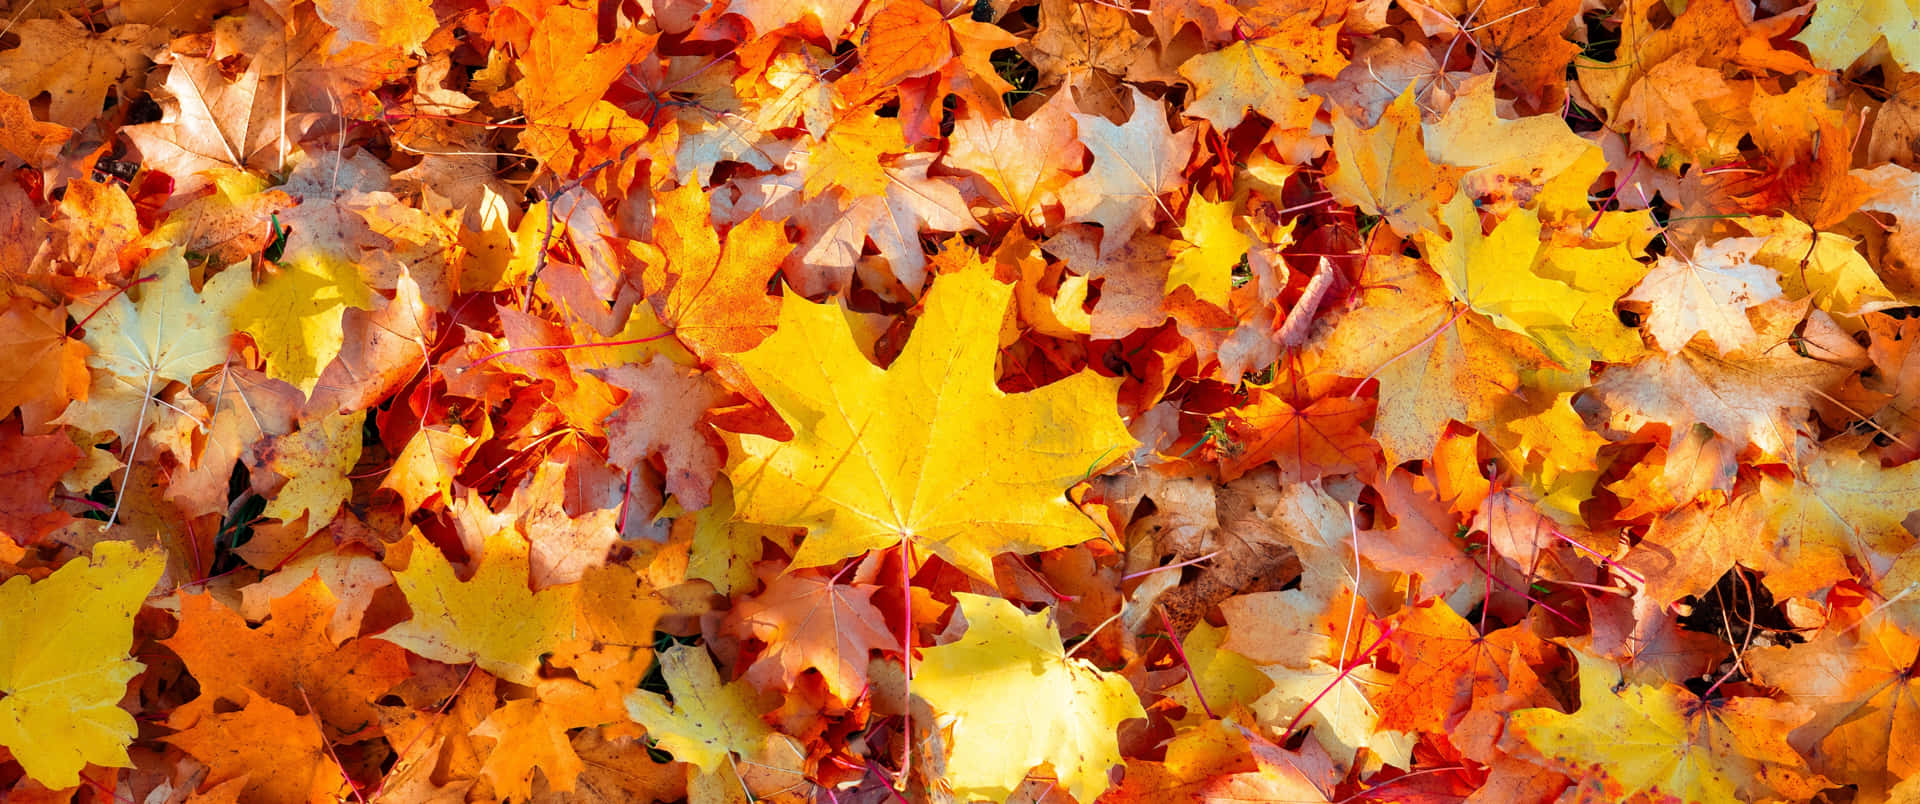 “The Stunning Autumn Foliage of Fall" Wallpaper